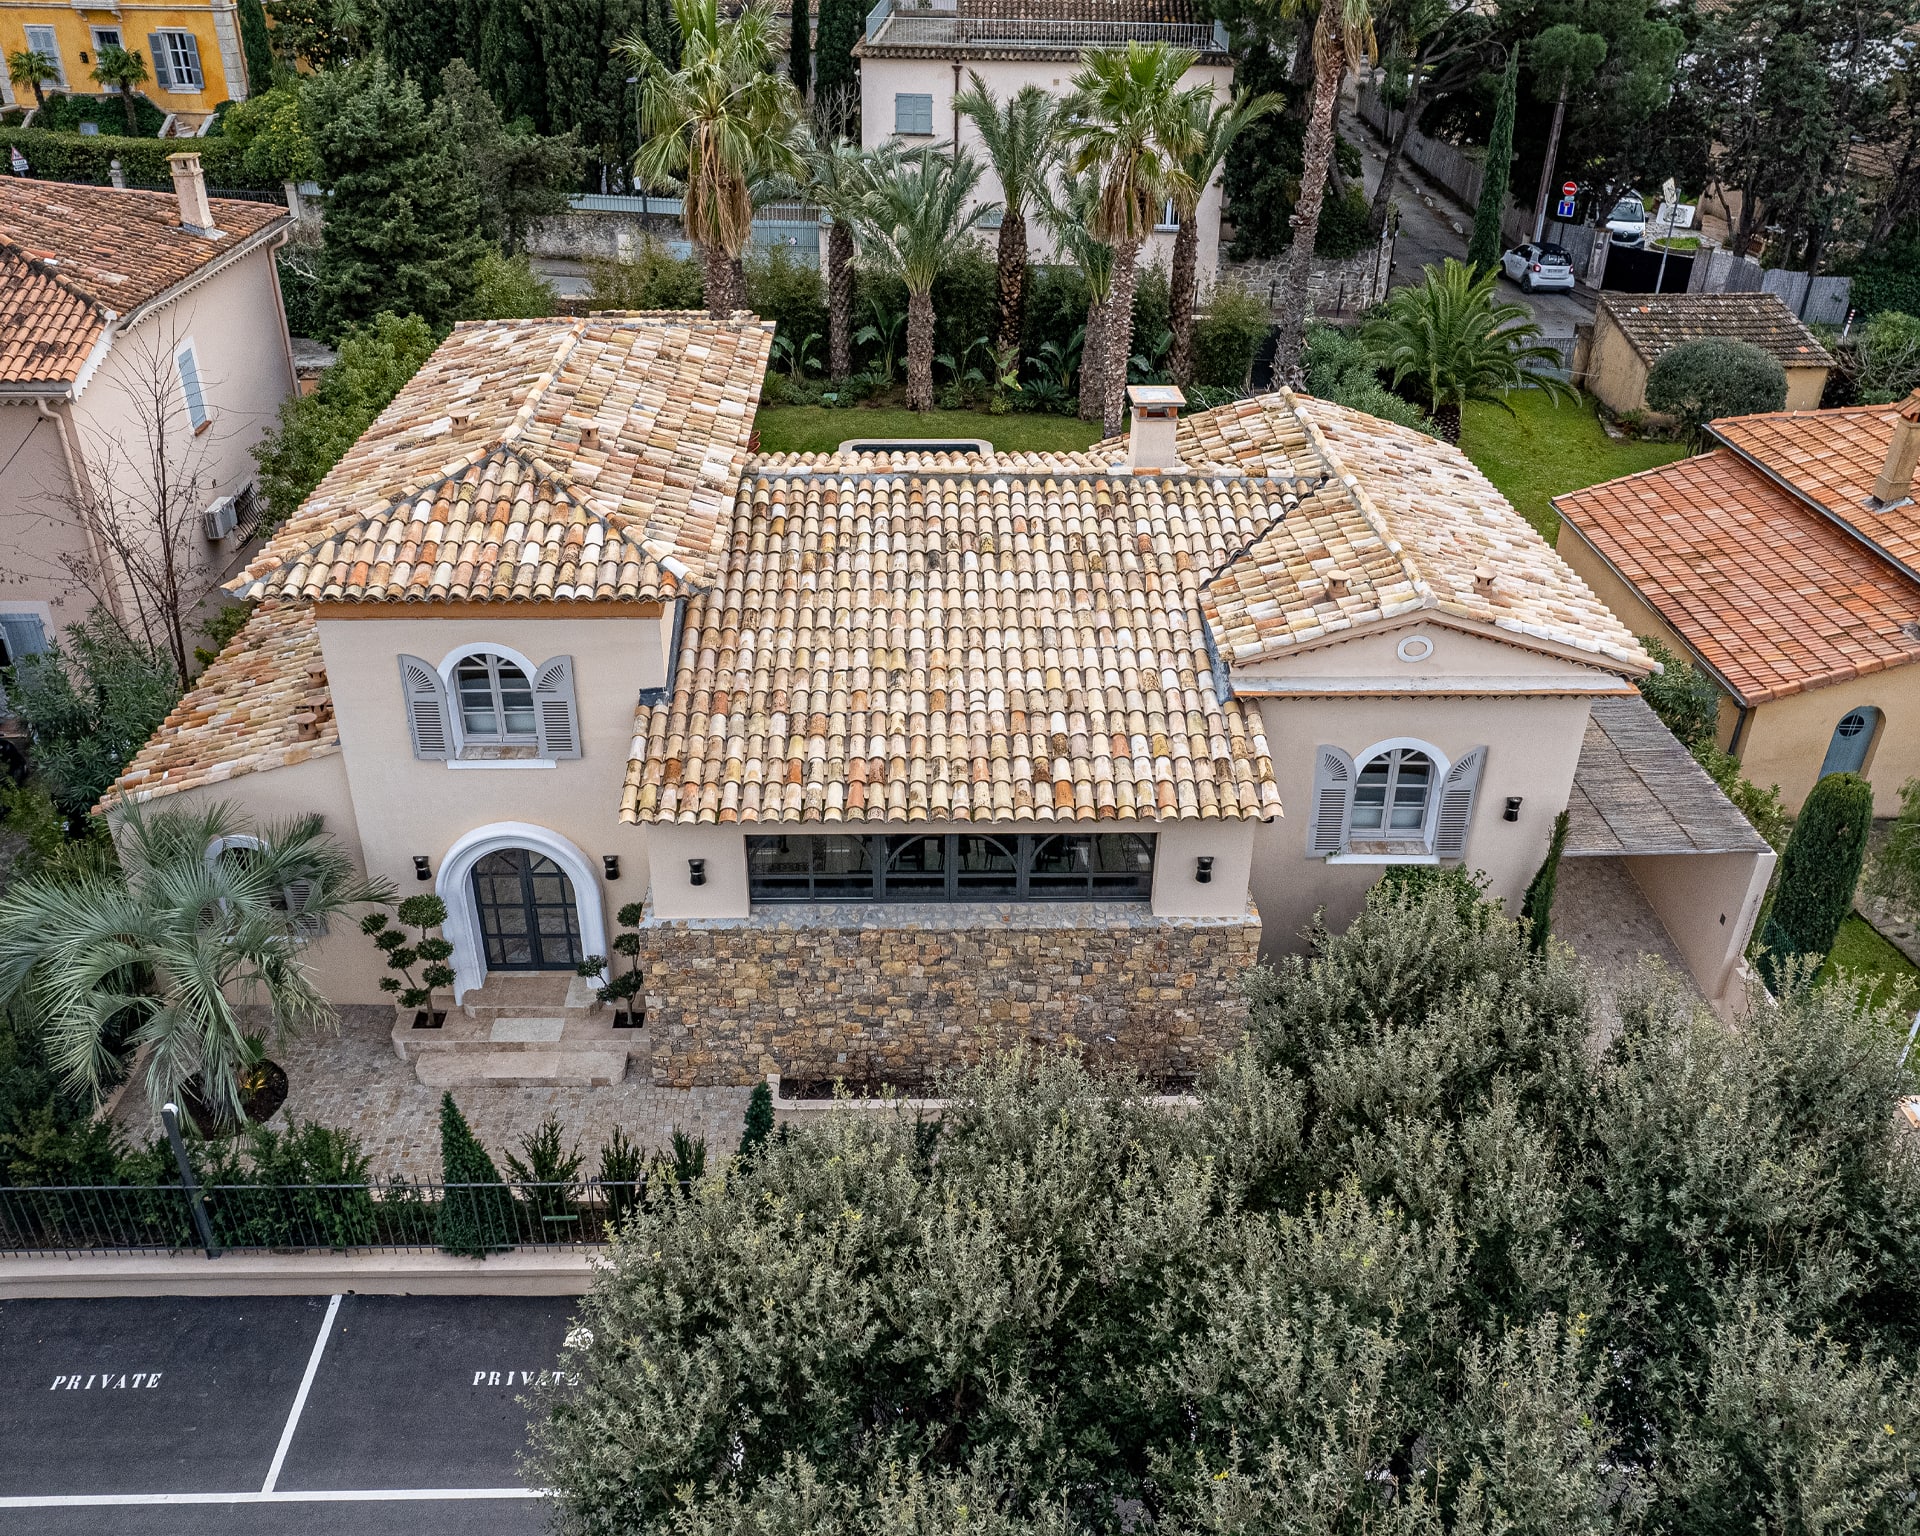 Agence Boris Folli - Architecture and project management - Saint-Tropez - Design and realization of a villa